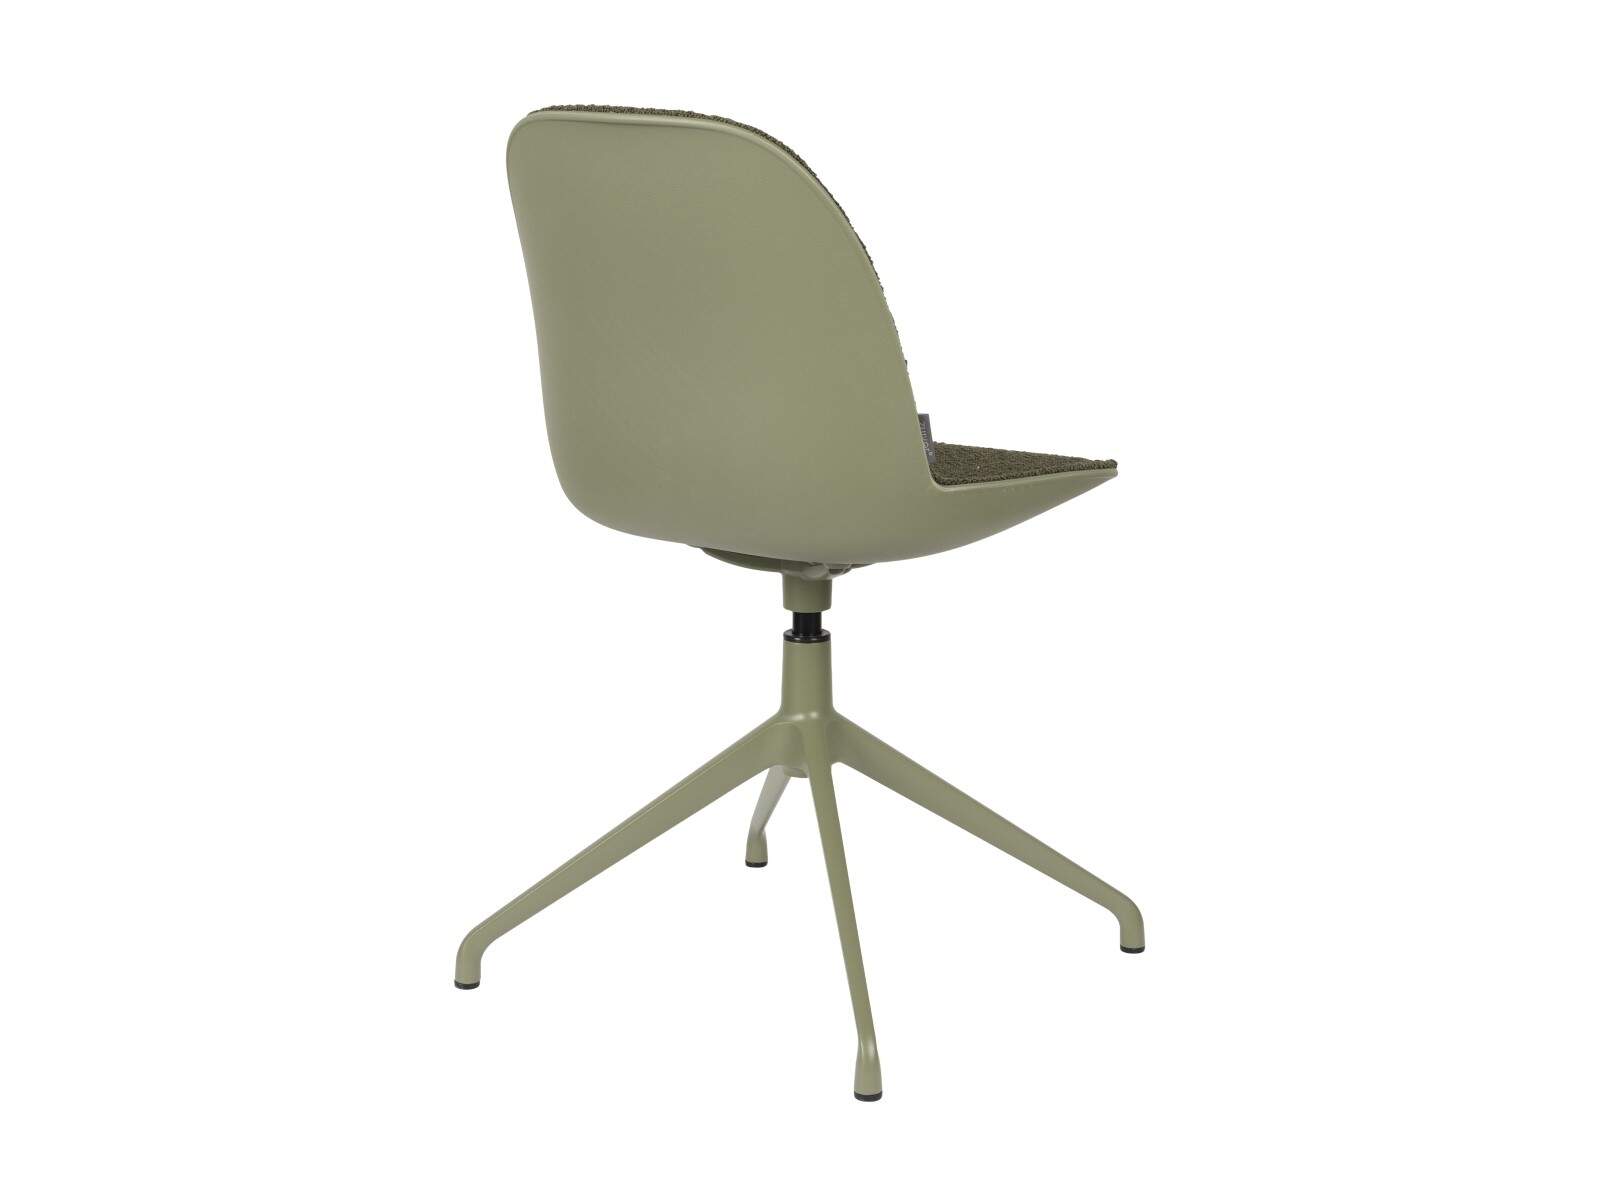 Zuiver Albert Kuip Office swivel chair green // Zuiver Albert Kuip Office irodai forgós szék zöld